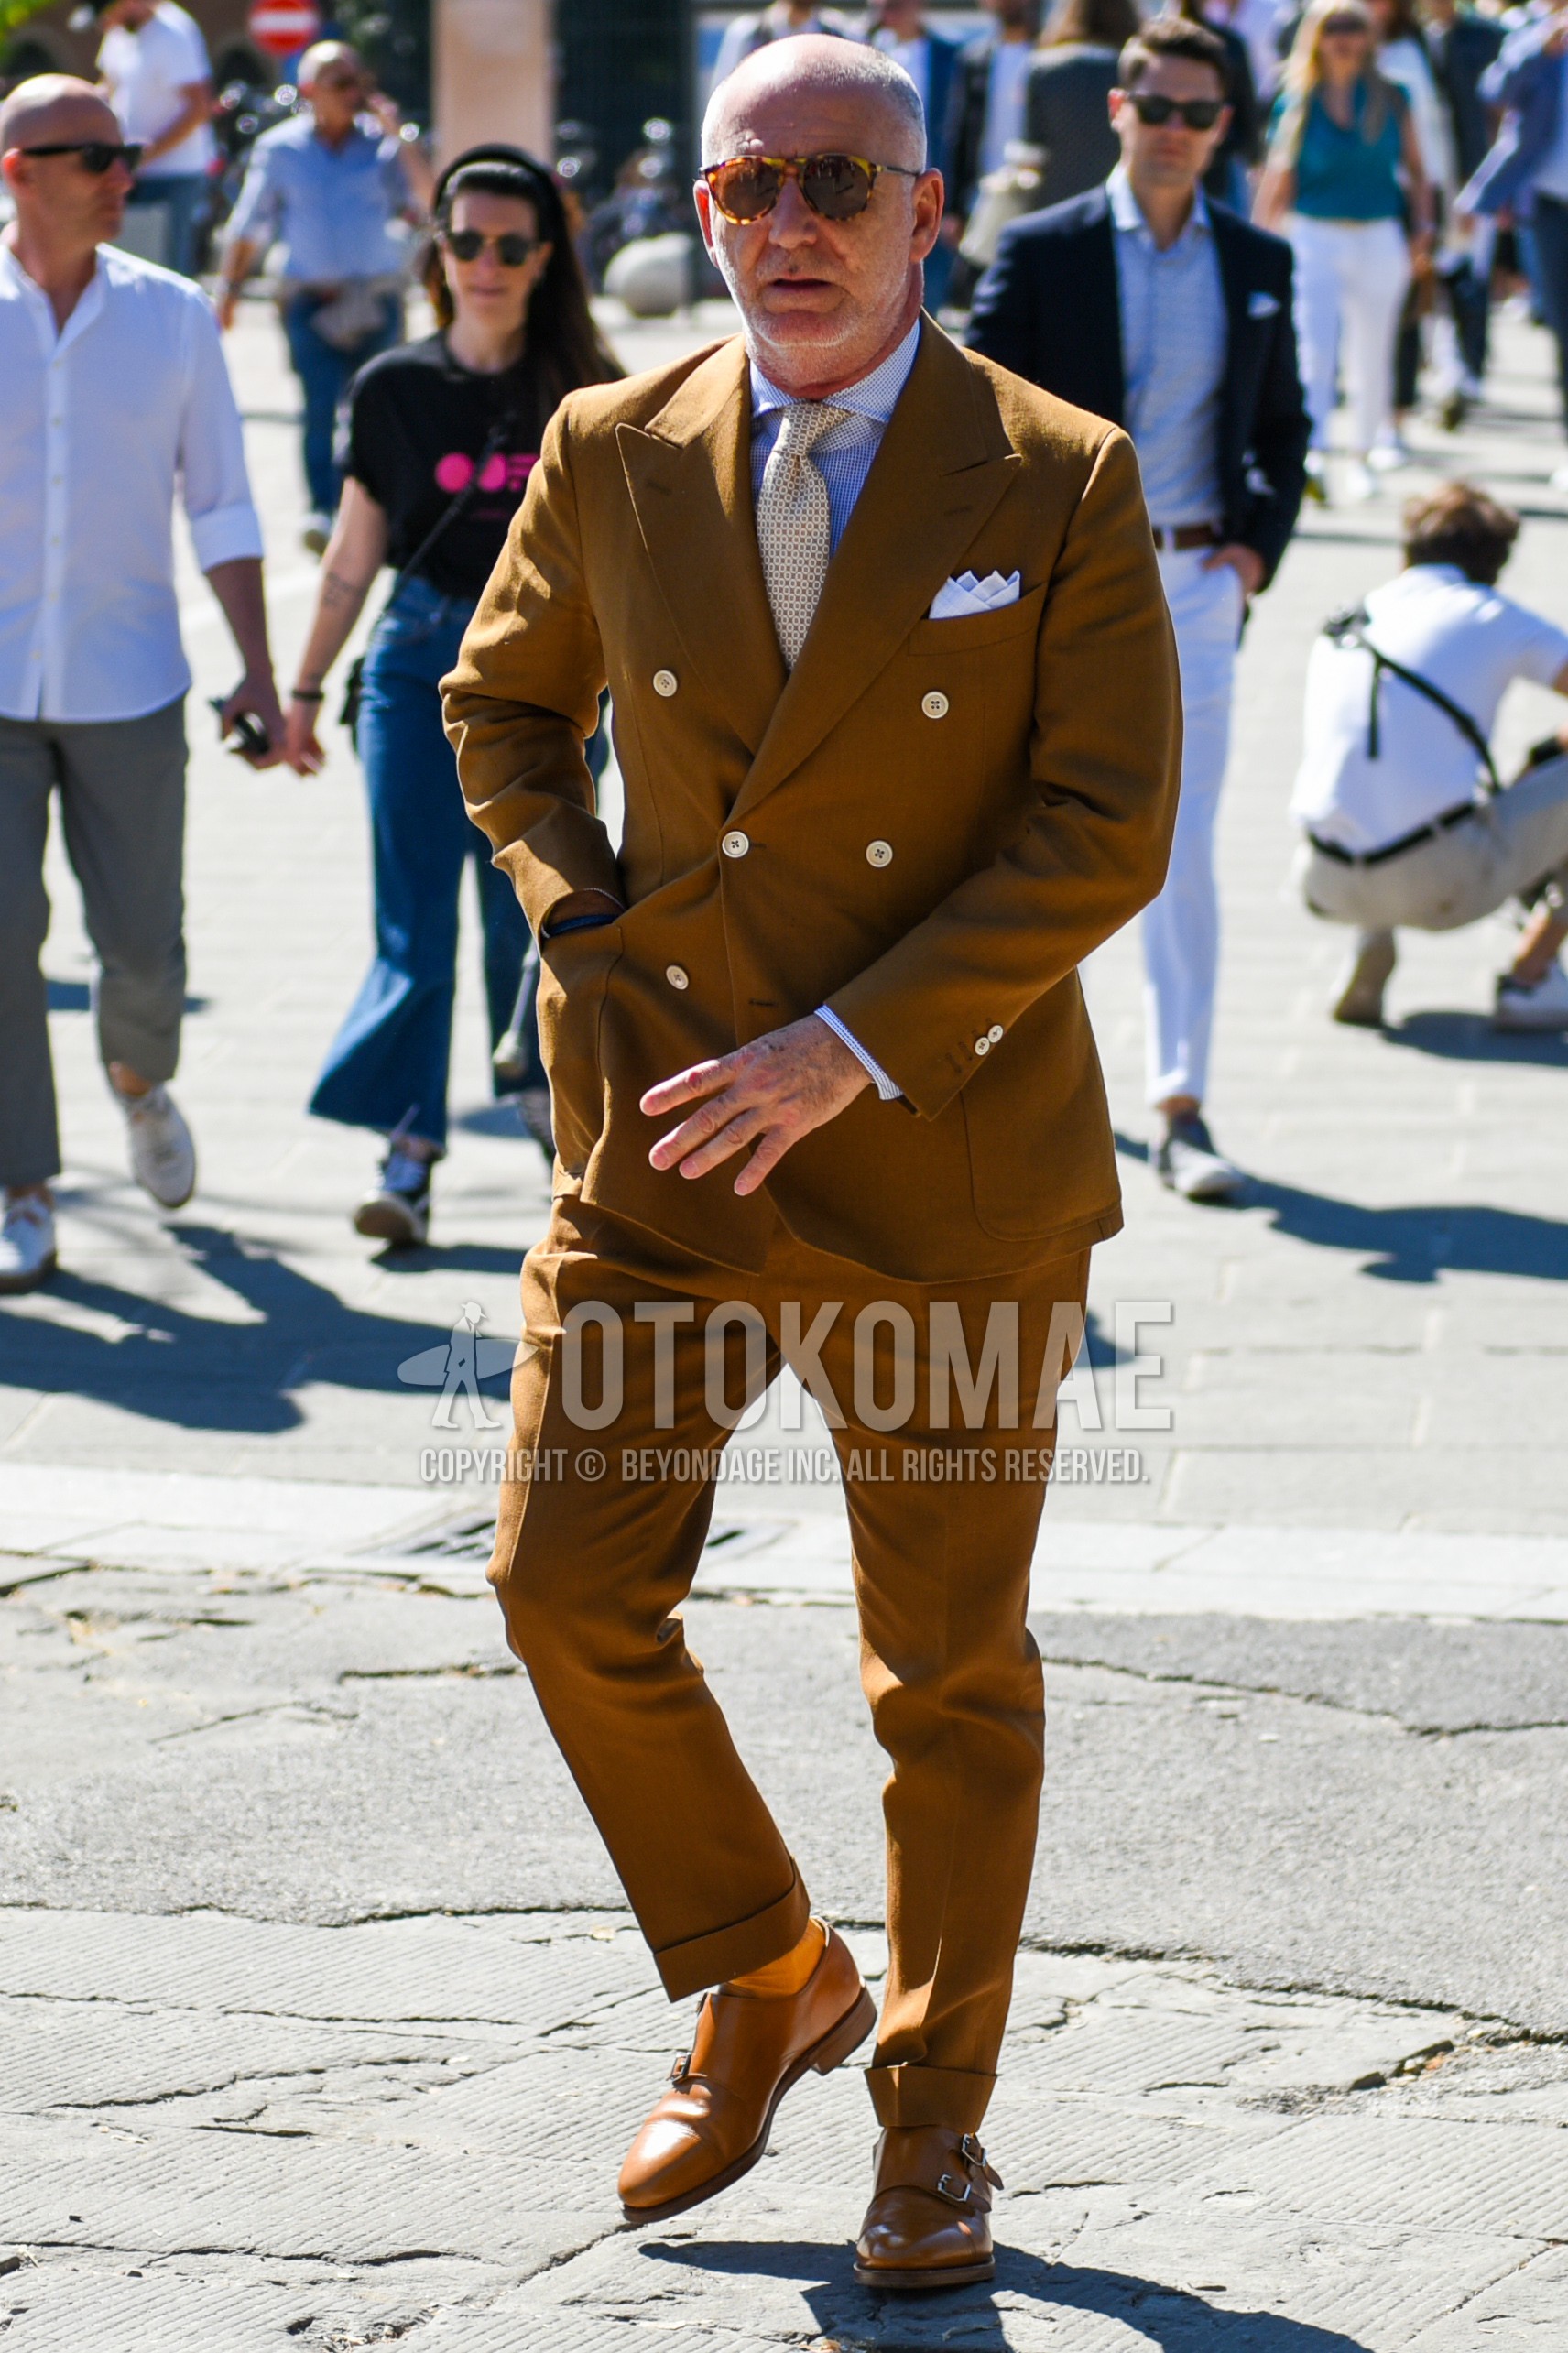 Men's spring autumn outfit with brown tortoiseshell sunglasses, white tops/innerwear shirt, orange plain socks, brown monk shoes leather shoes, beige plain suit, beige necktie necktie.